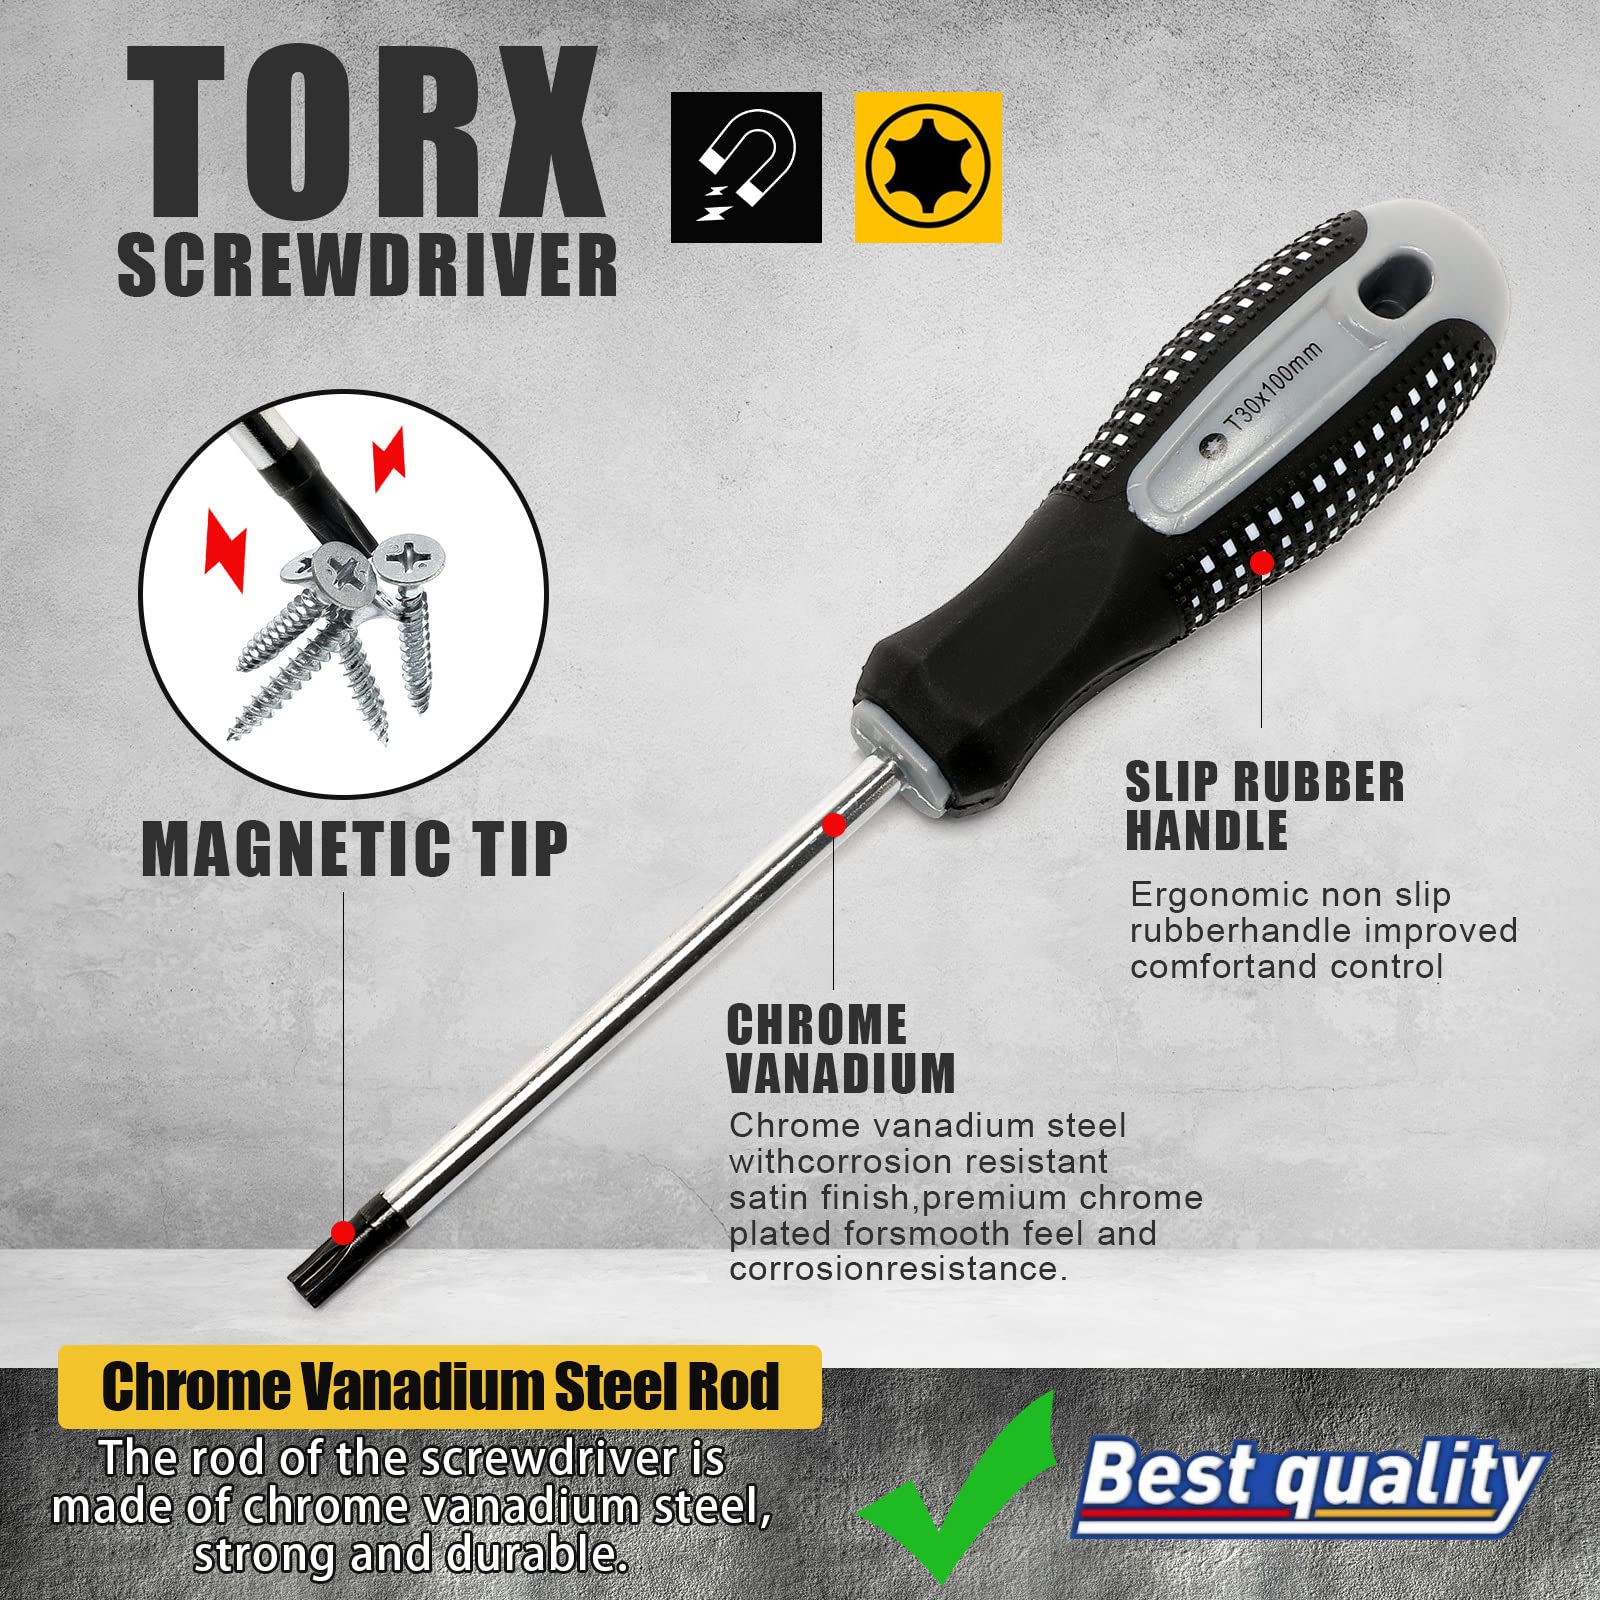 Torx Screwdriver Set of 16 - Magnetic Torx Bit Star Driver - Precision, Mini, Small, & Large Sizes - T3, T4, T5, T6, T7, T8, T9, T10, T15, T20, T25, T27, T30, T35, T40, and T50